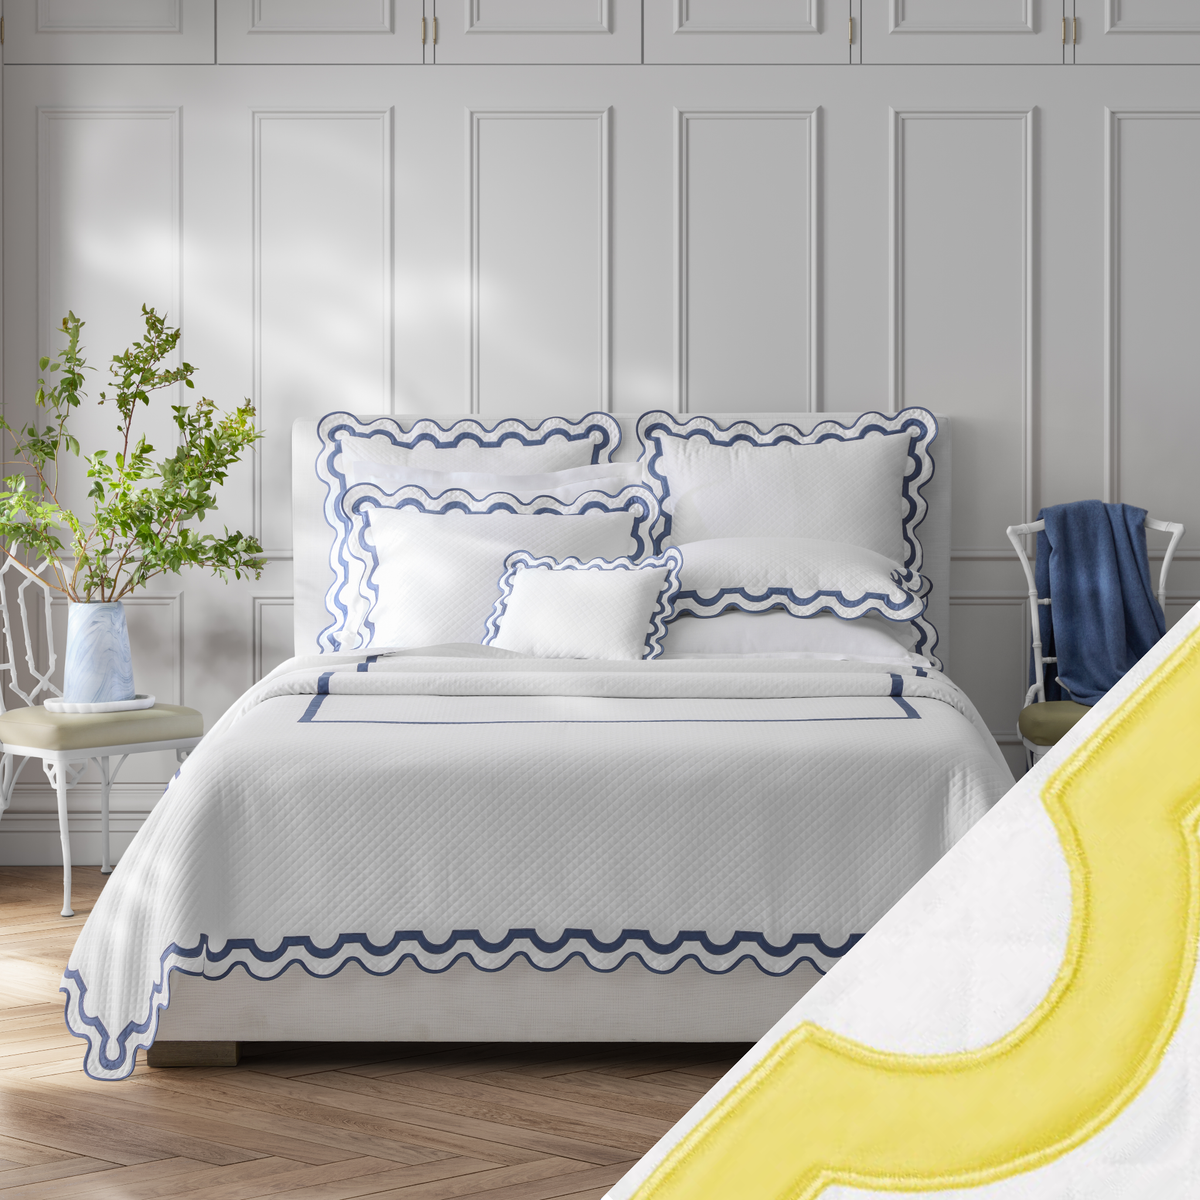 Full Bed Dressed in Matouk Mirasol Matelassé Bedding with Swatch in Lemon